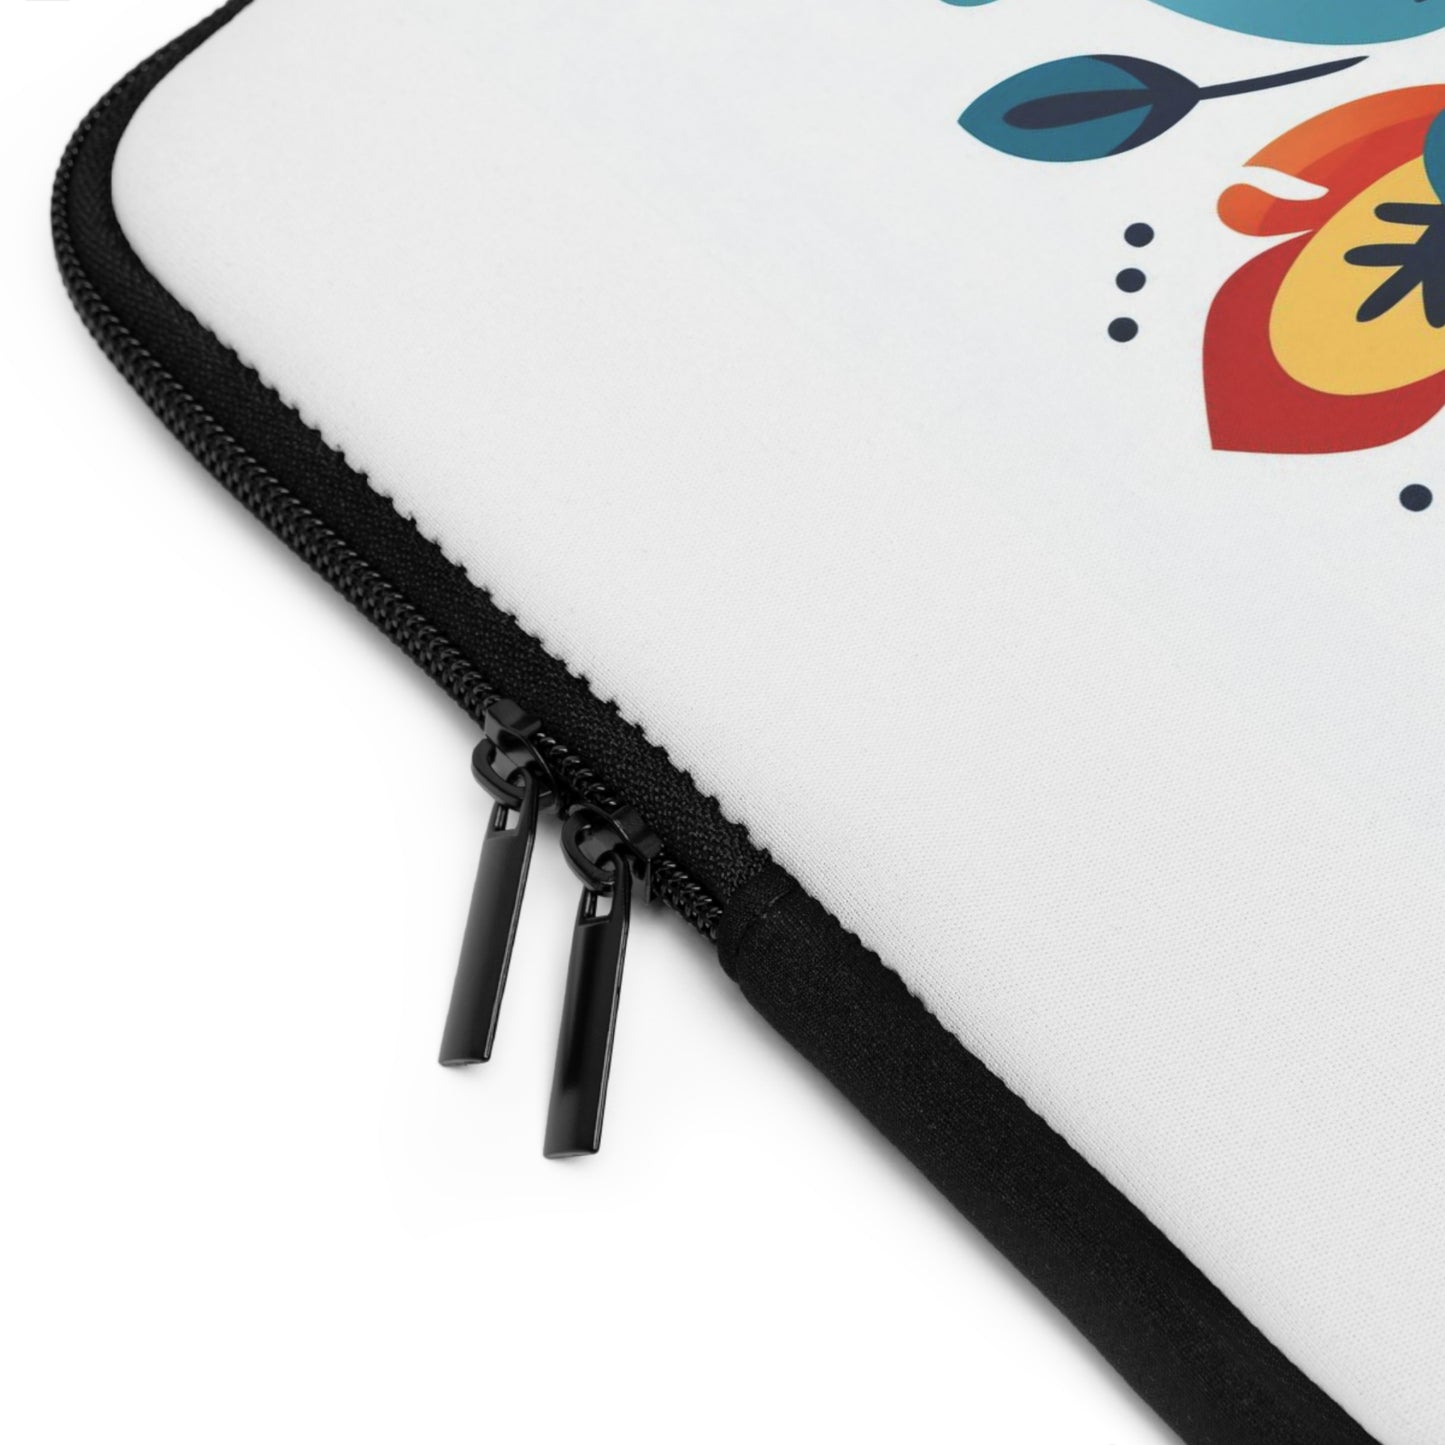 Folk Art Flower Laptop Sleeve, Boho Blooms Tablet Sleeve, Cottagecore iPad Cover, Scandinavian MacBook Sleeve, Swedish Zipper Pouch